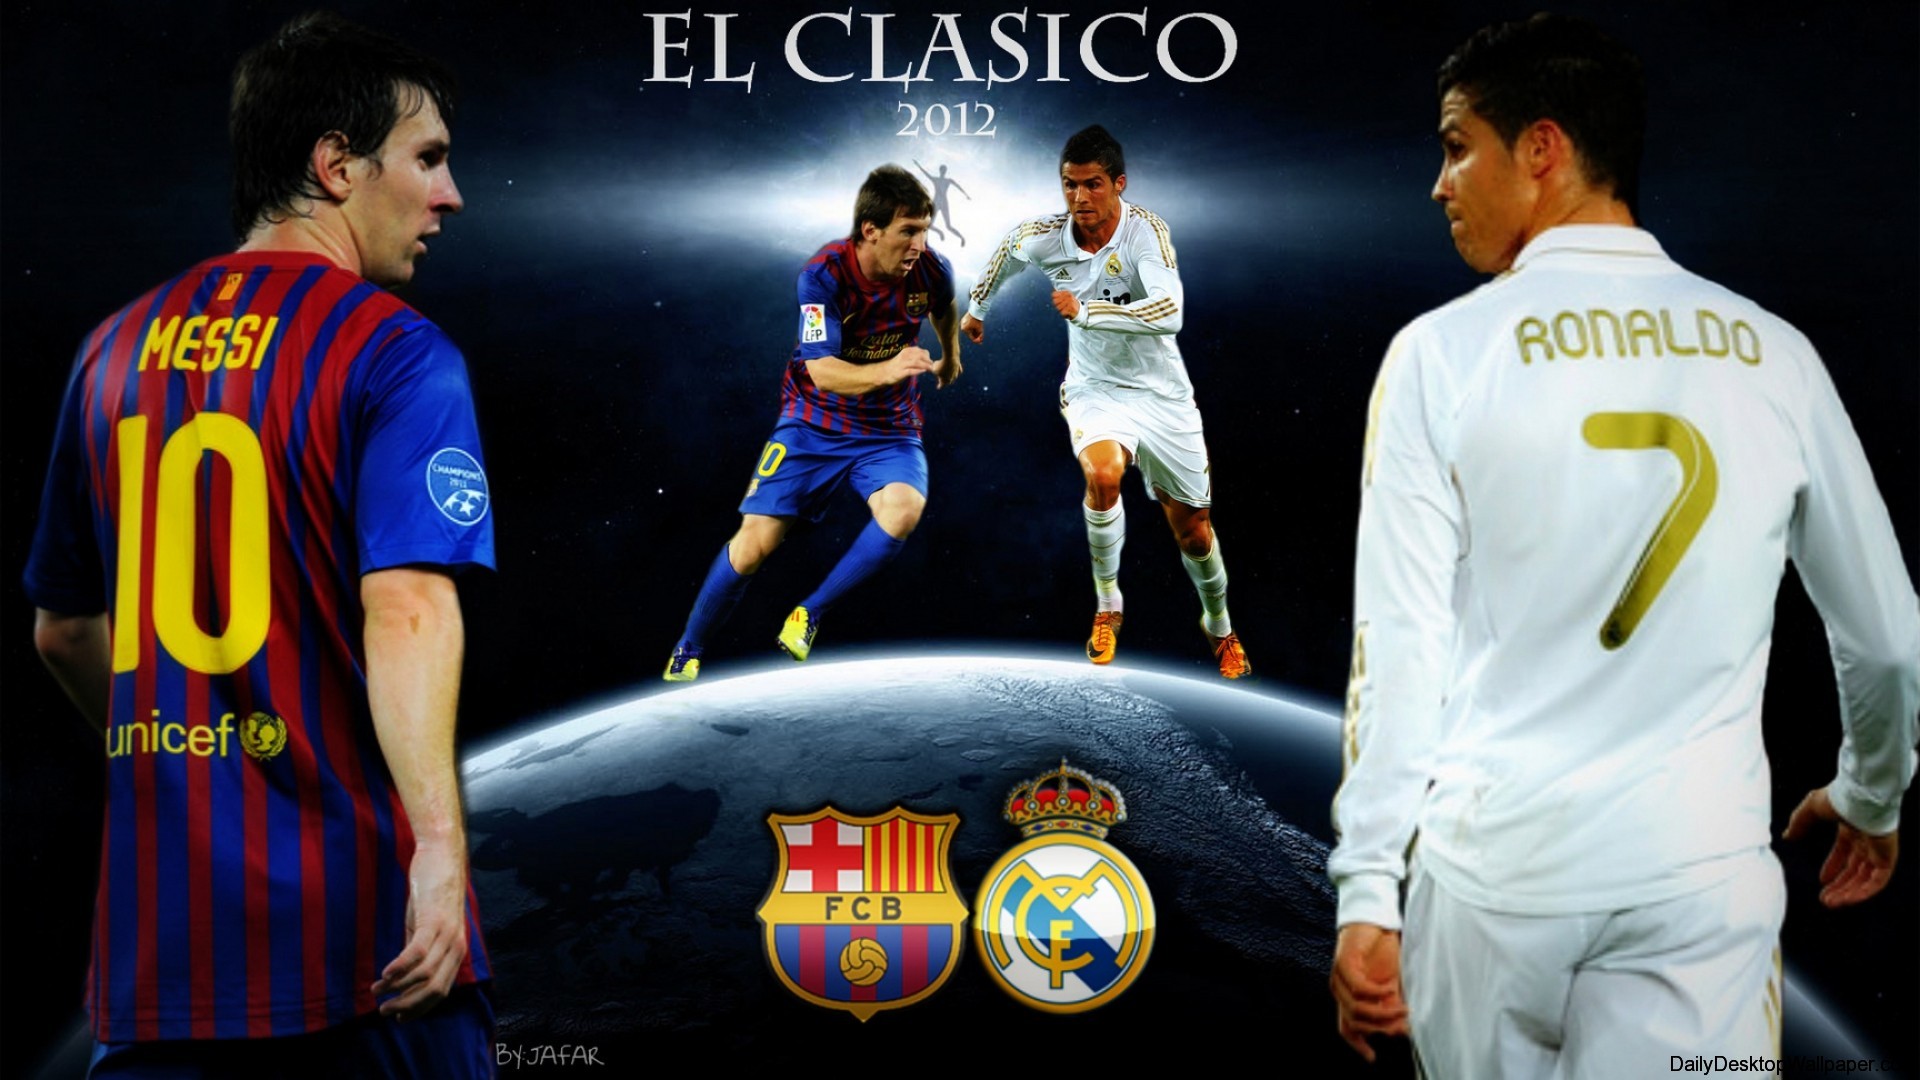 Messi and Ronaldo 2012